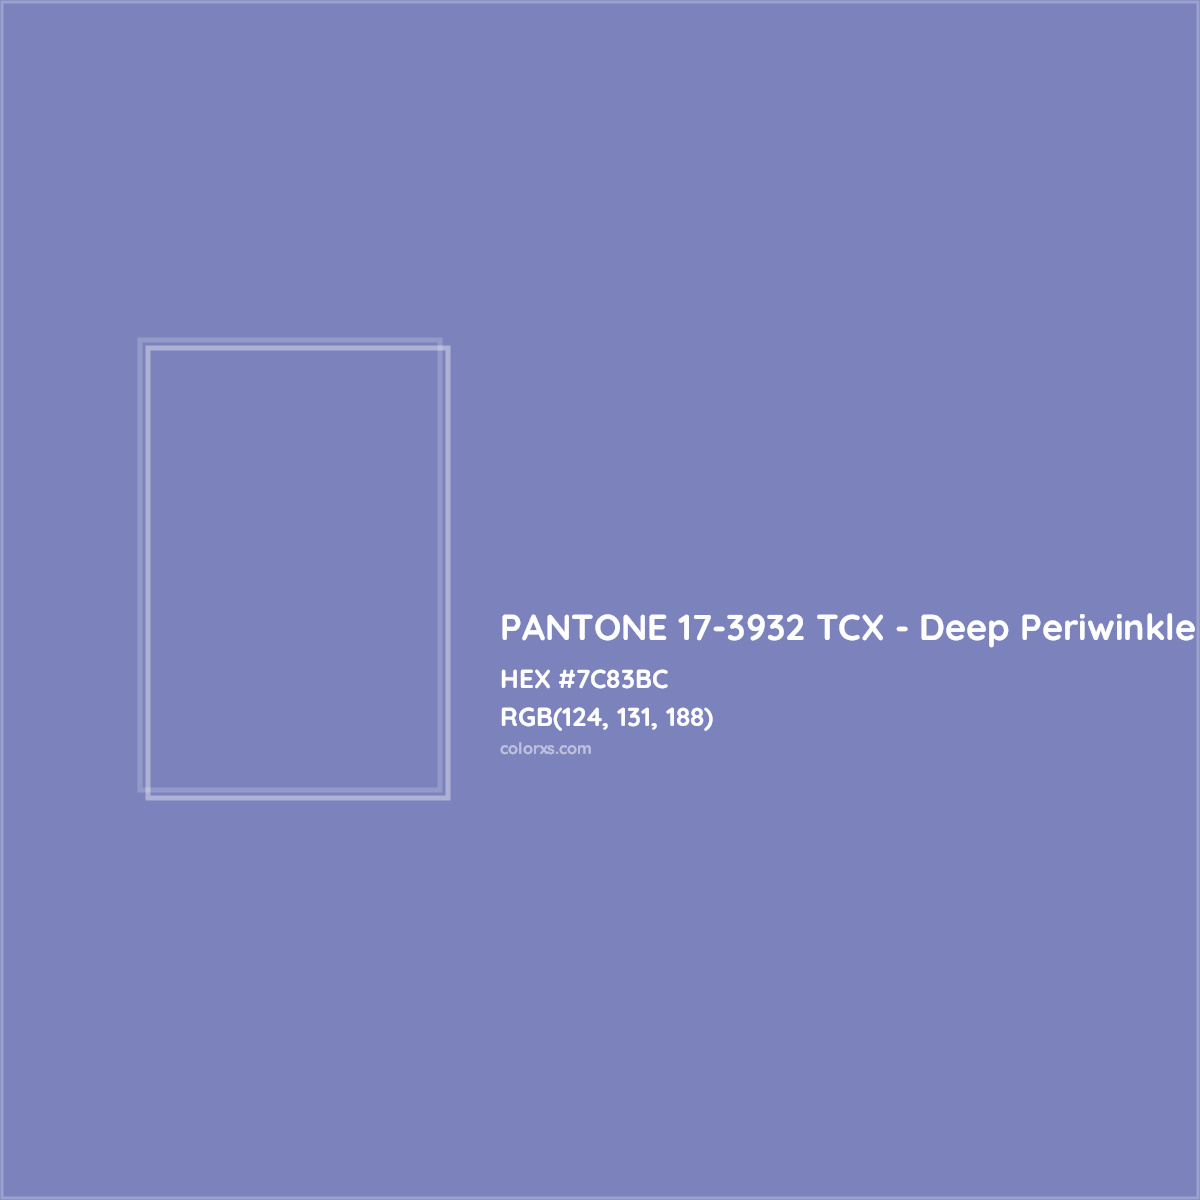 HEX #7C83BC PANTONE 17-3932 TCX - Deep Periwinkle CMS Pantone TCX - Color Code